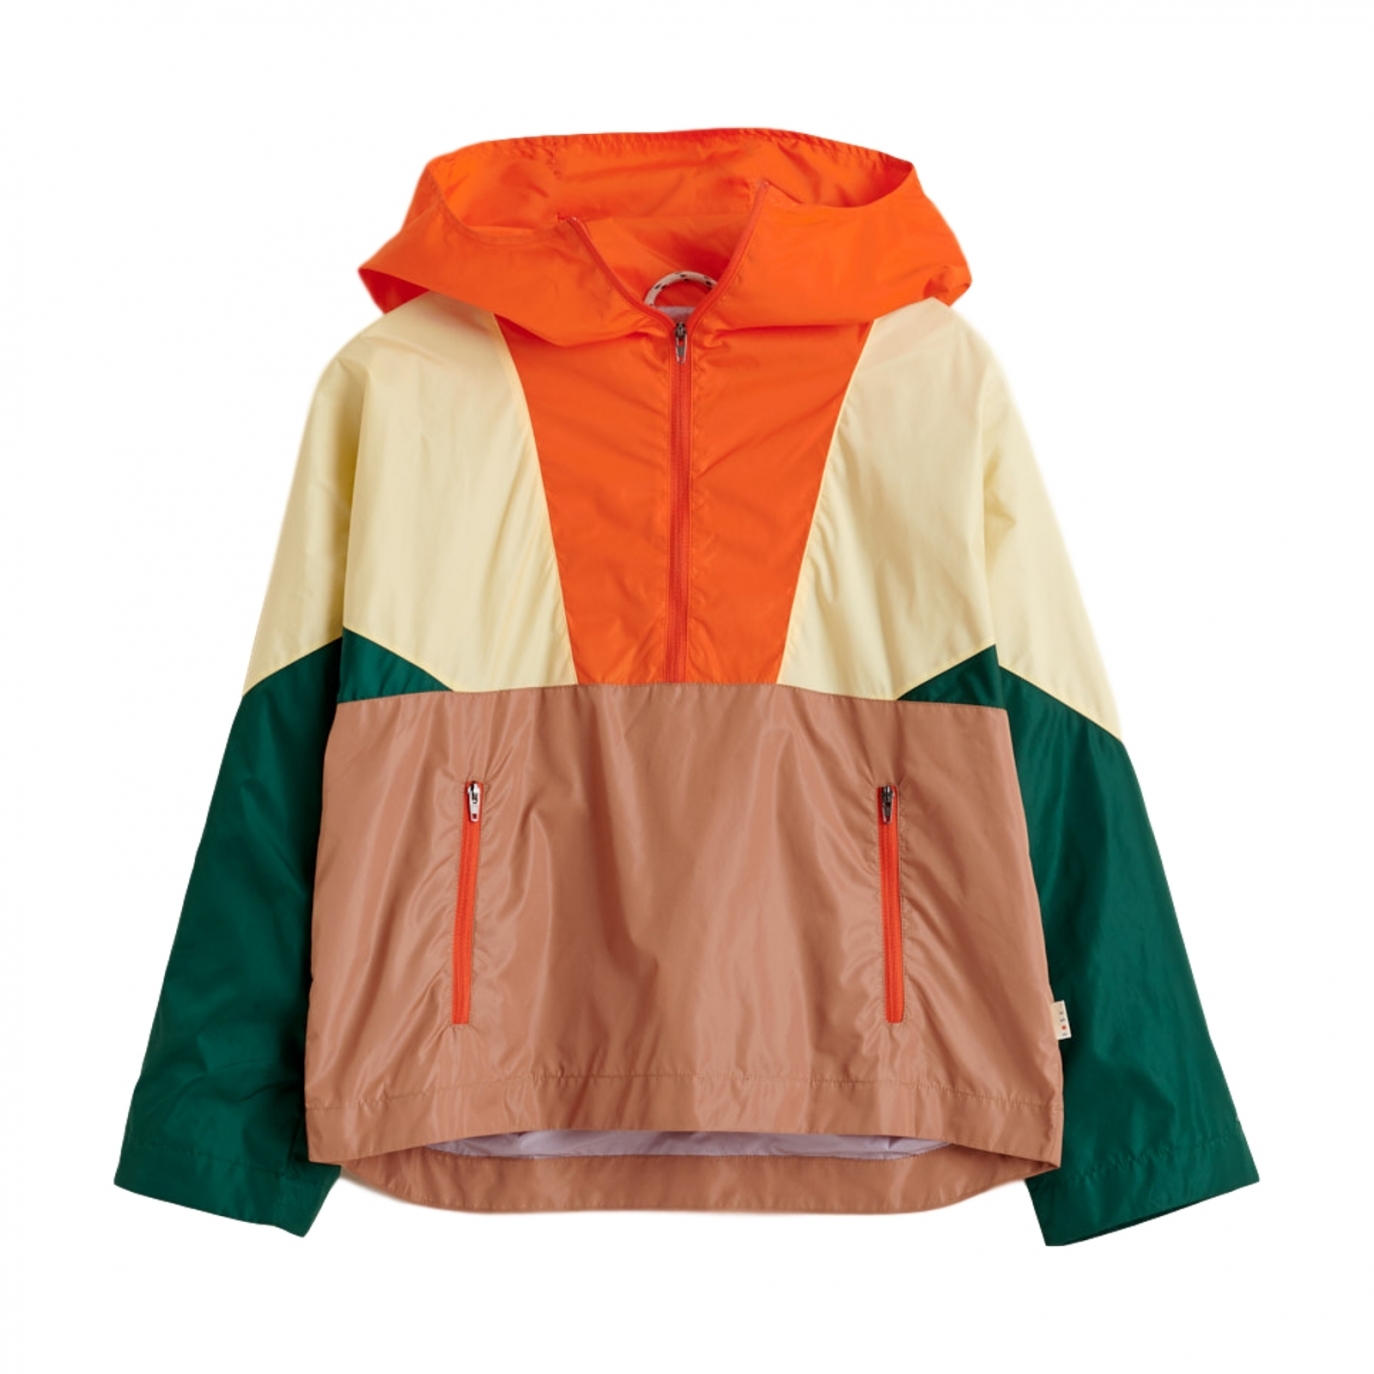 Bellerose - Hoodie Jacket Orange - Coats, jackets & coveralls - BK201503 P1135 